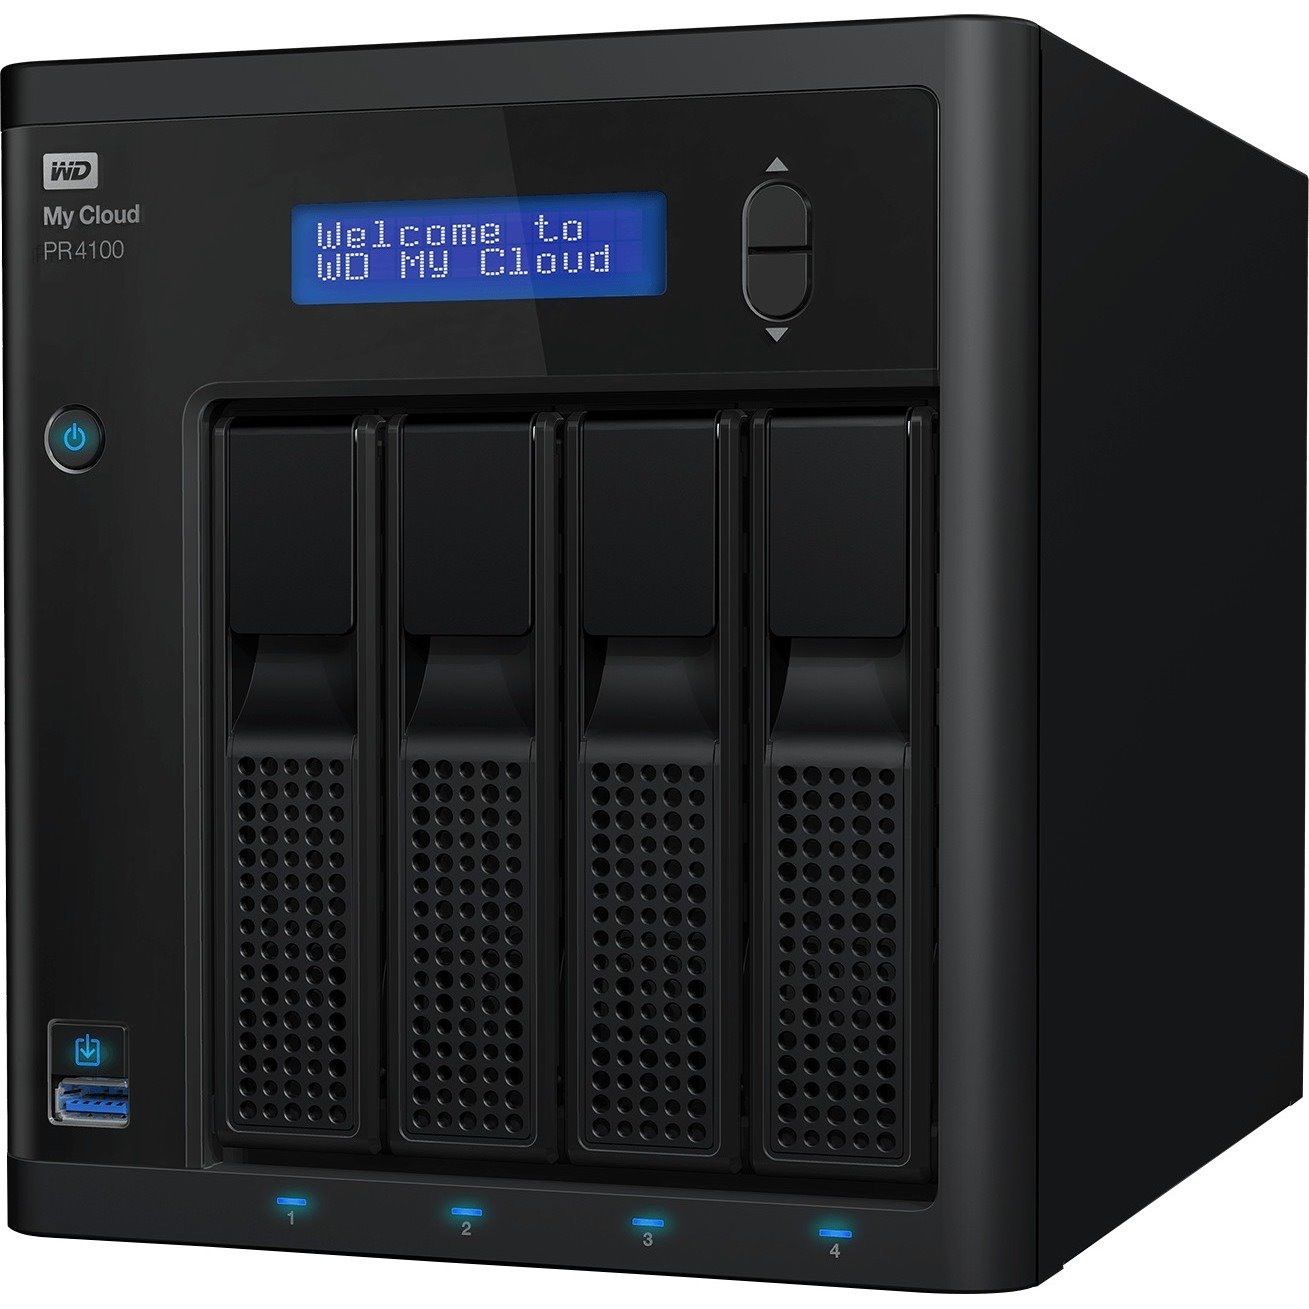 WD My Cloud Pro PR4100 4 x Total Bays NAS Storage System - Intel Pentium N3710 Quad-core (4 Core) 1.60 GHz - 4 GB RAM Desktop